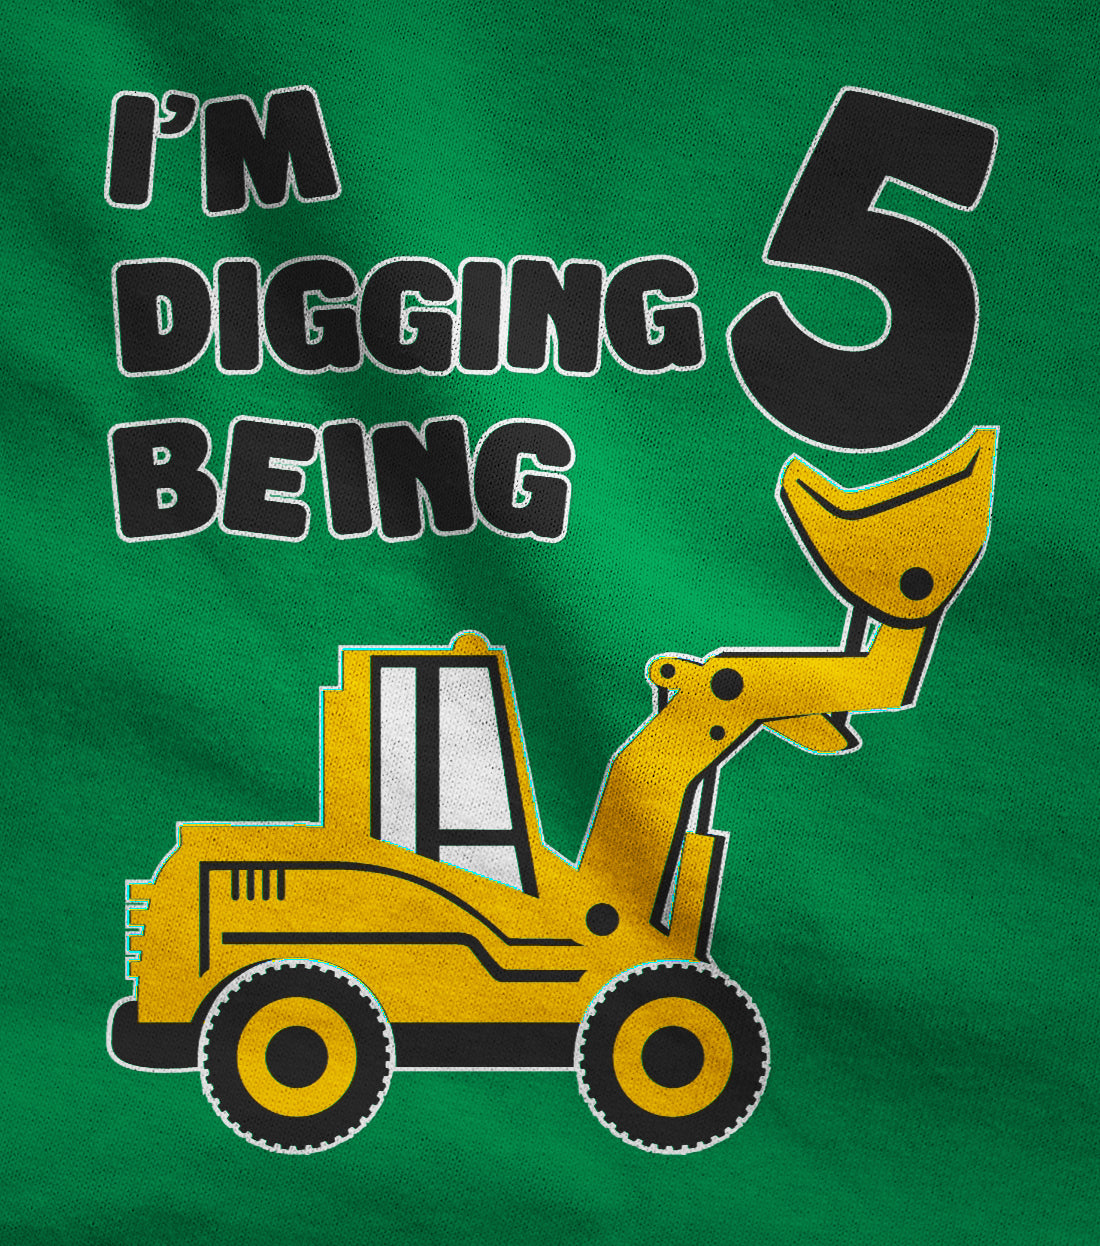 Digging Being 5 - Five Years Old Birthday Toddler Kids T-Shirt 